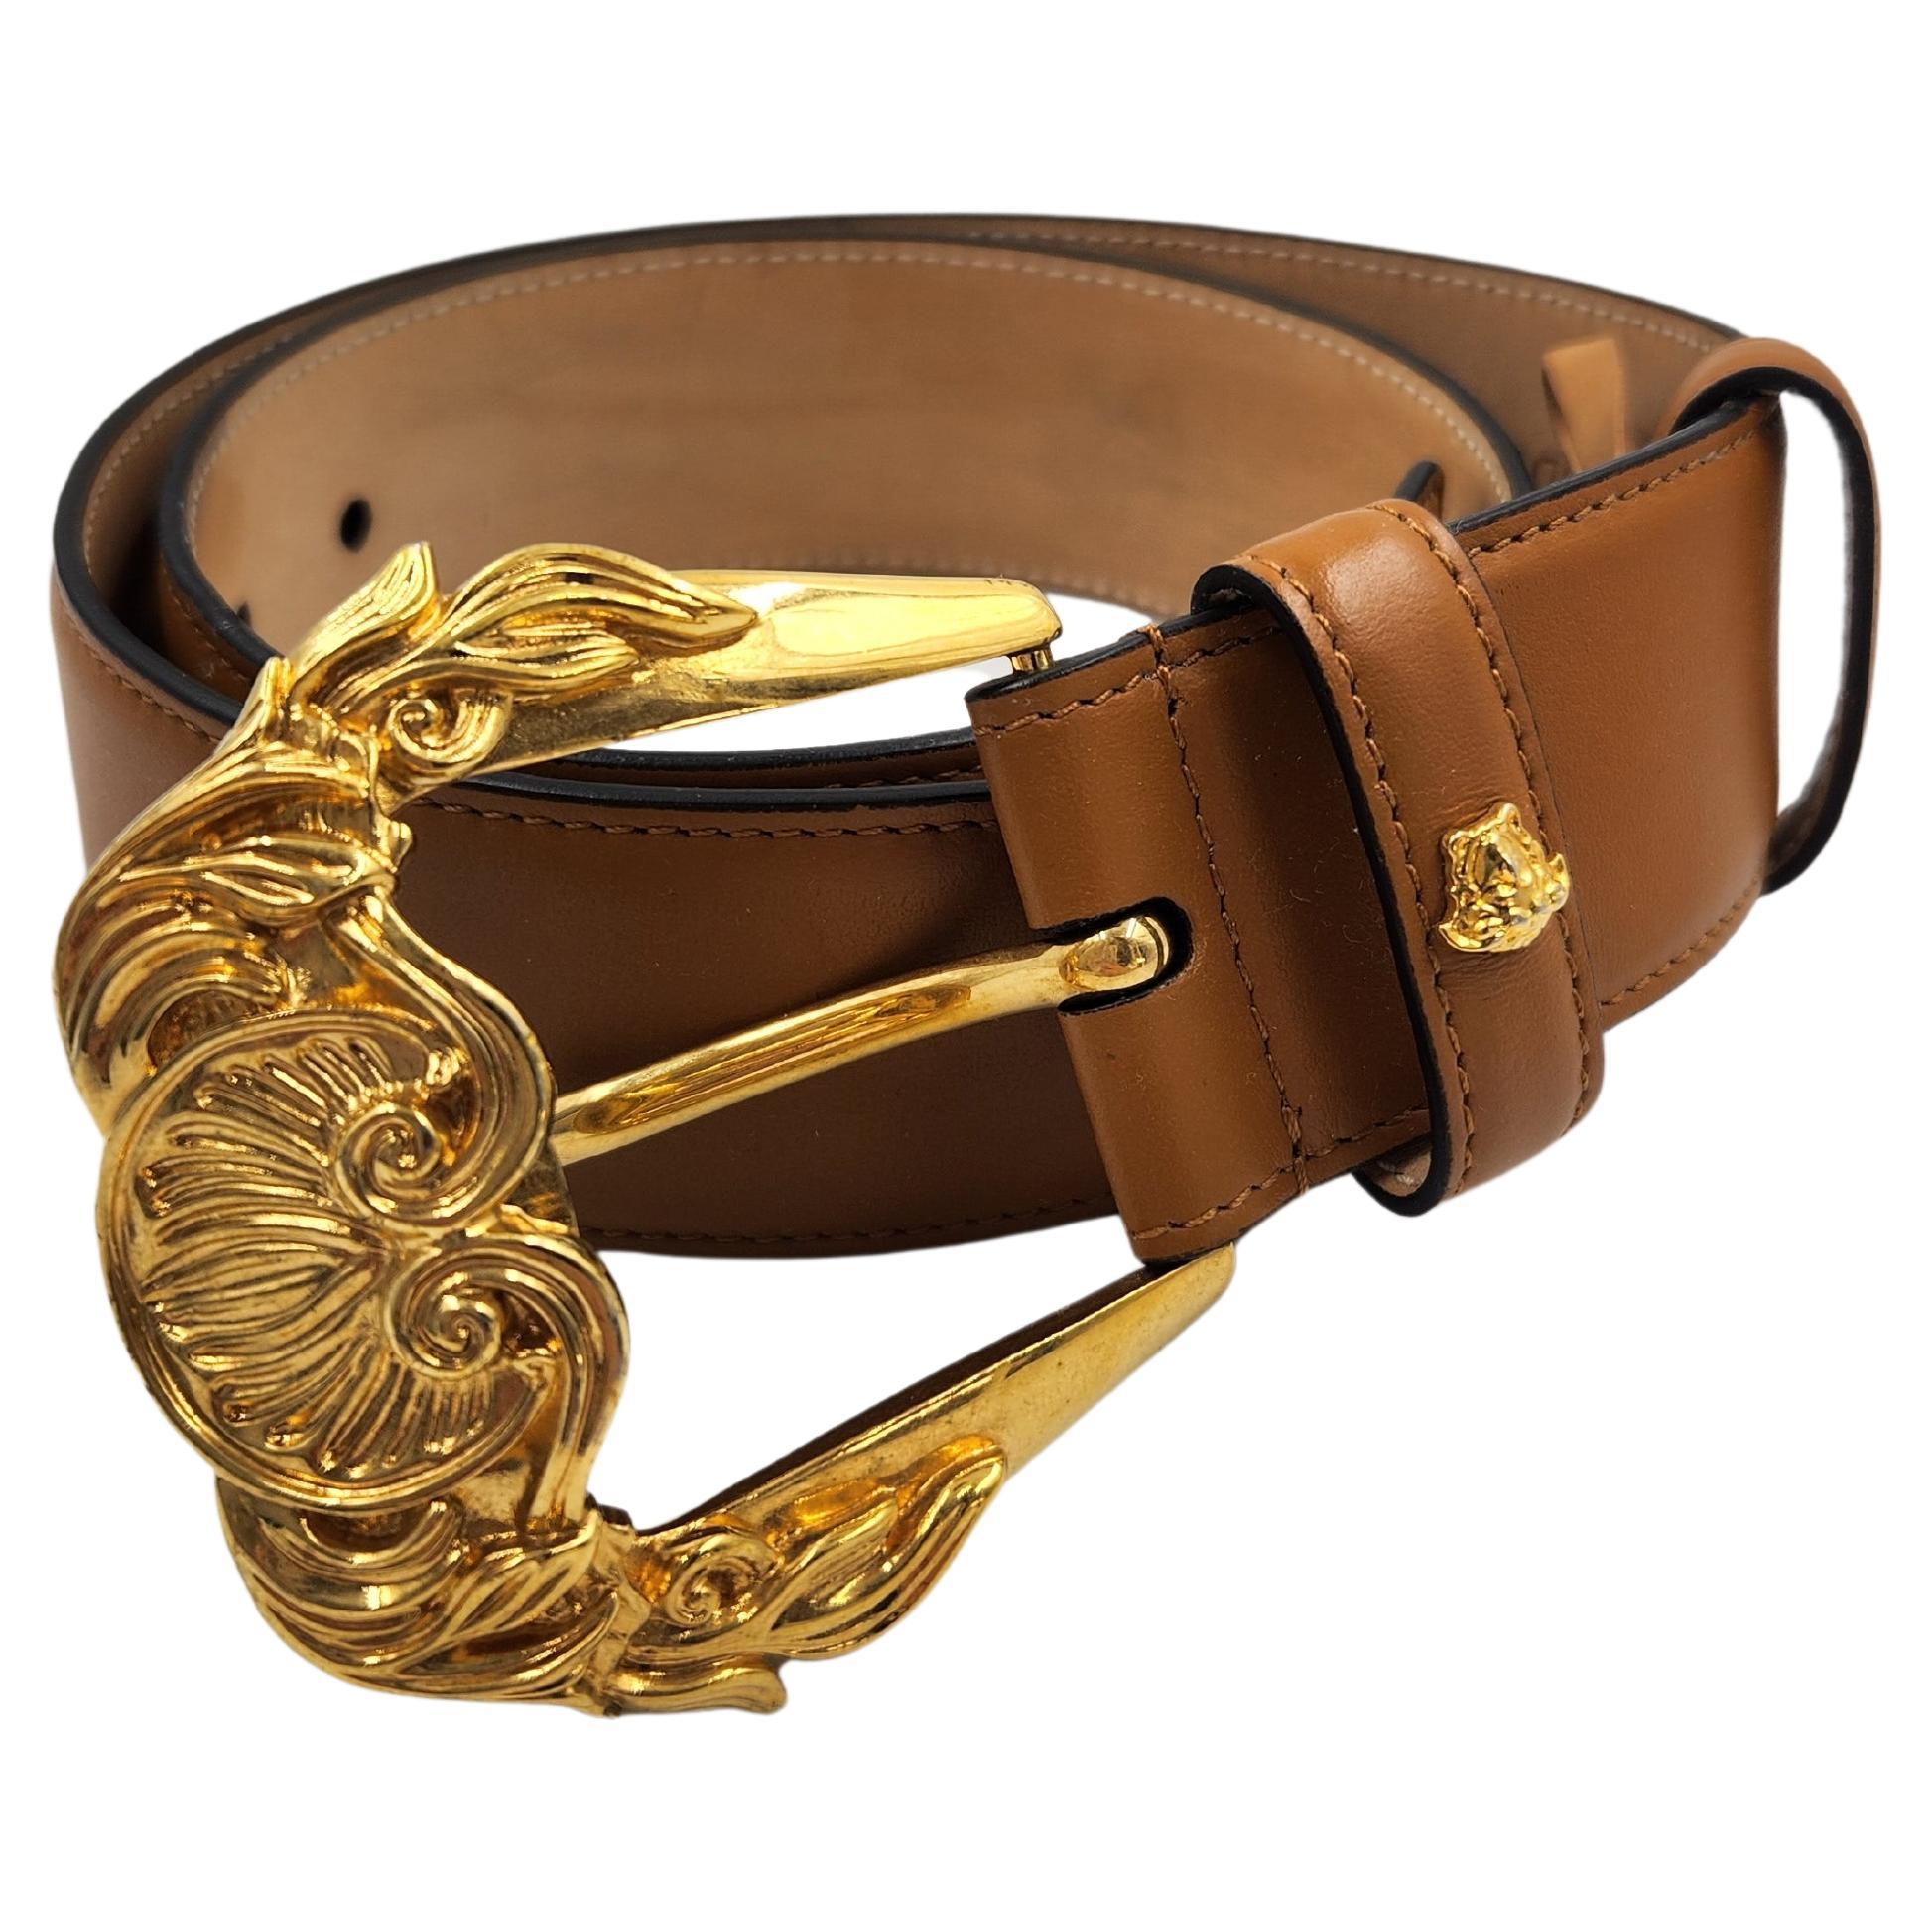 2019's VERSACE Medusa Gold Baroque Women's Brown Leather Belt 75